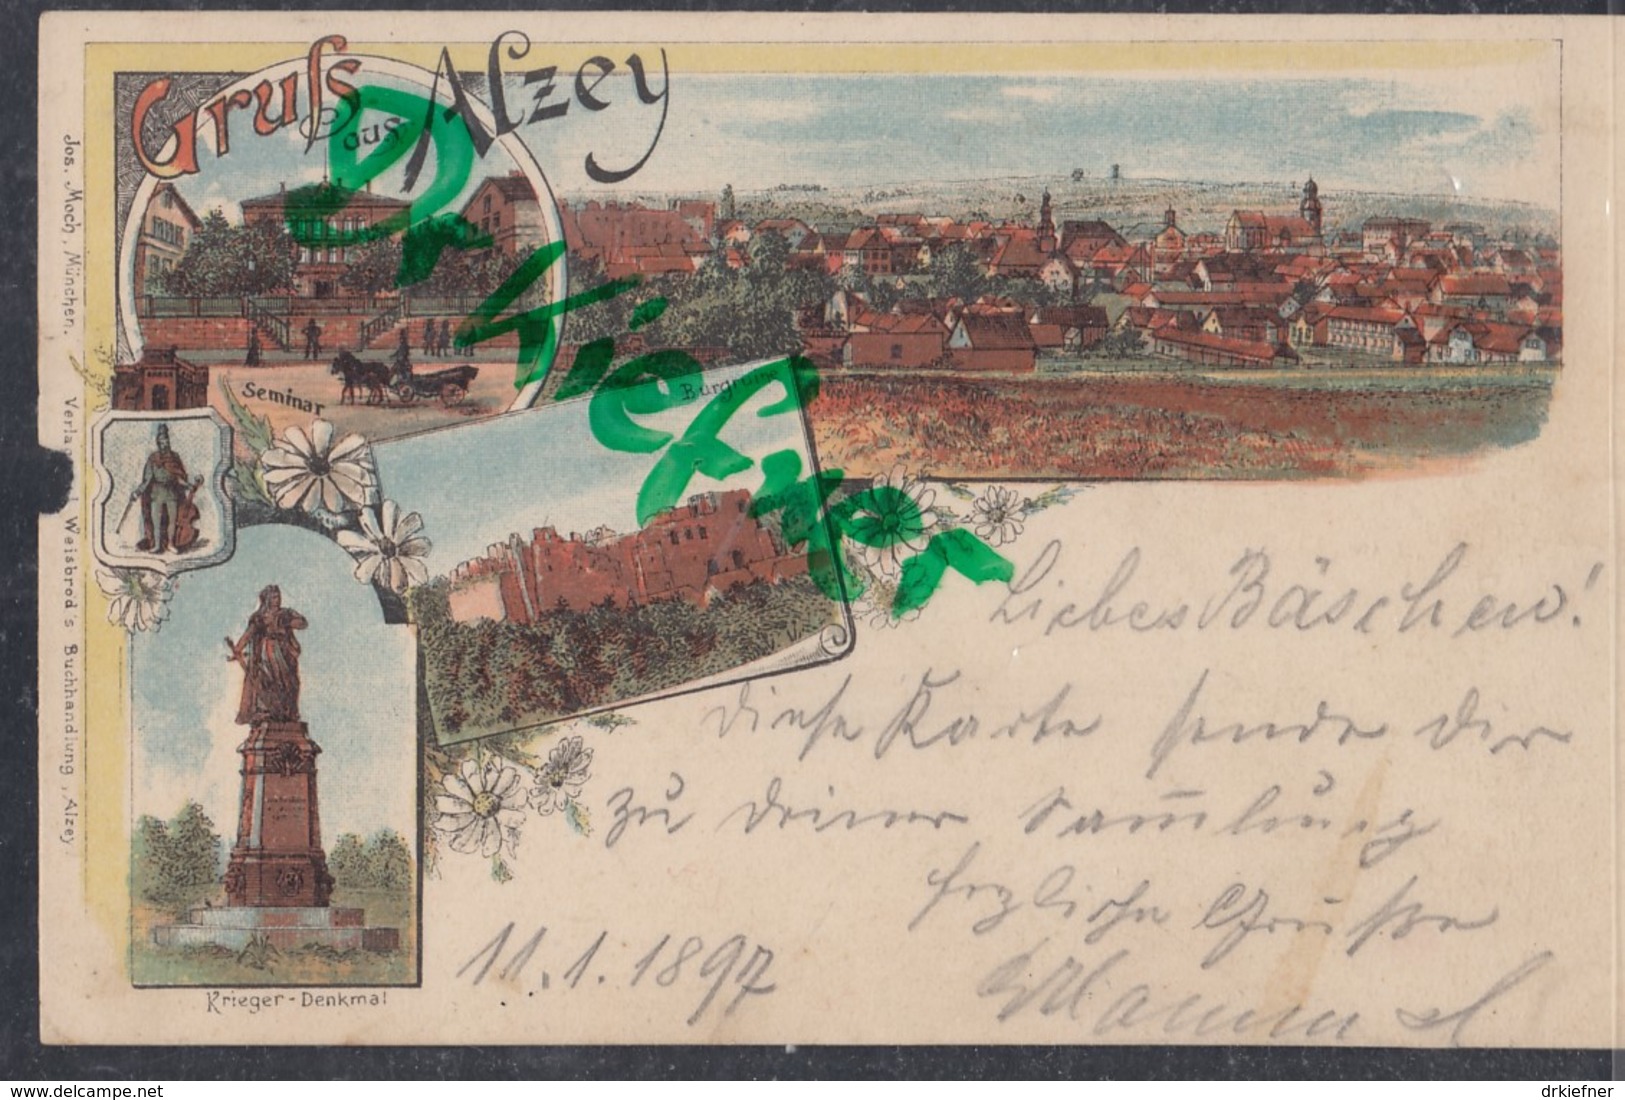 LITHOGRAPHIE: Gruss Aus Alzey, Pfalz, Um 1896, Stadtansicht, Seminar, Krieger-Denkmal, Burgruine, Bahnpost-Stempel - Alzey